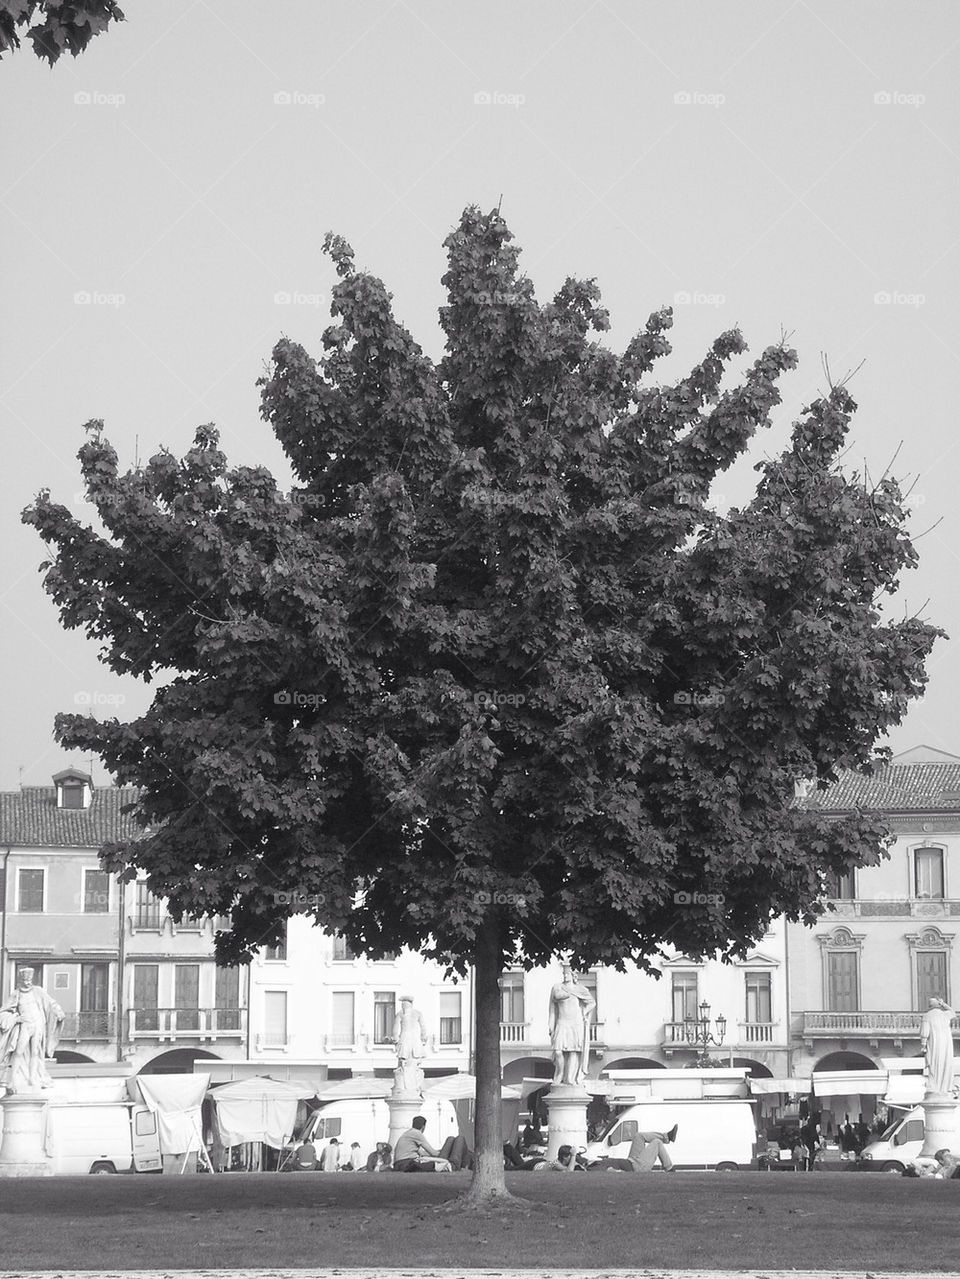 The tree